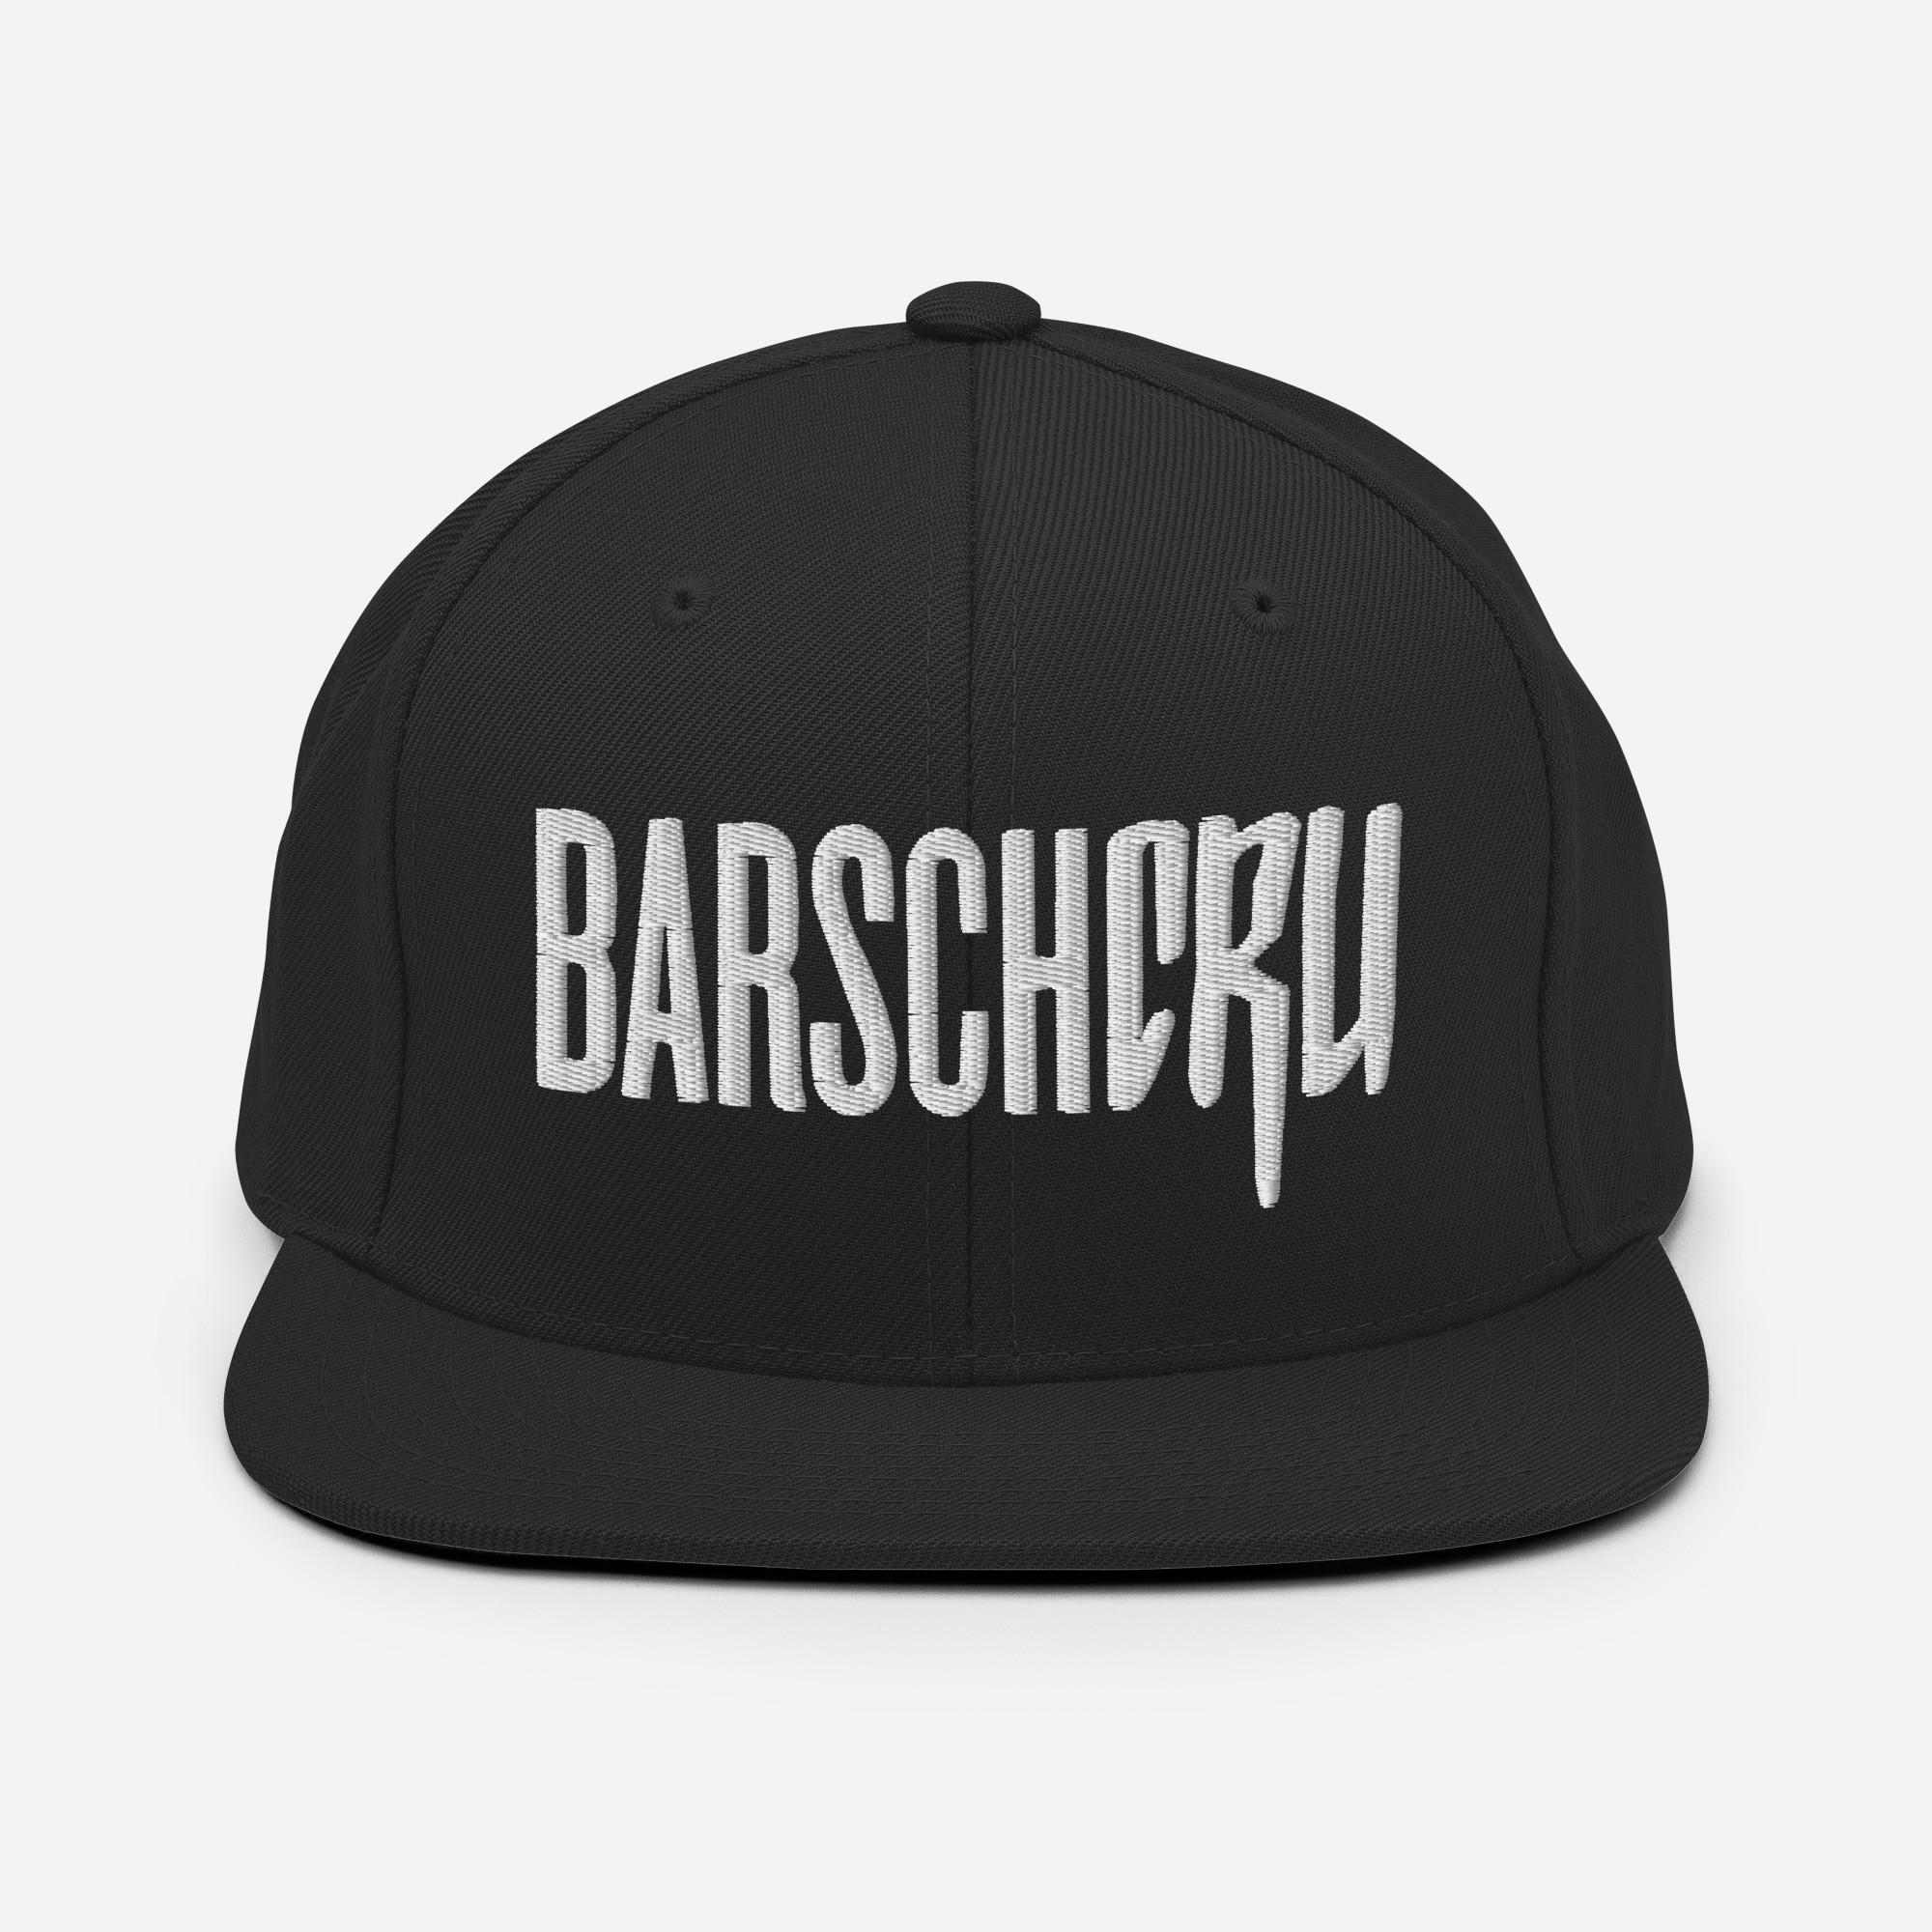 Barschcru Snapback-Cap